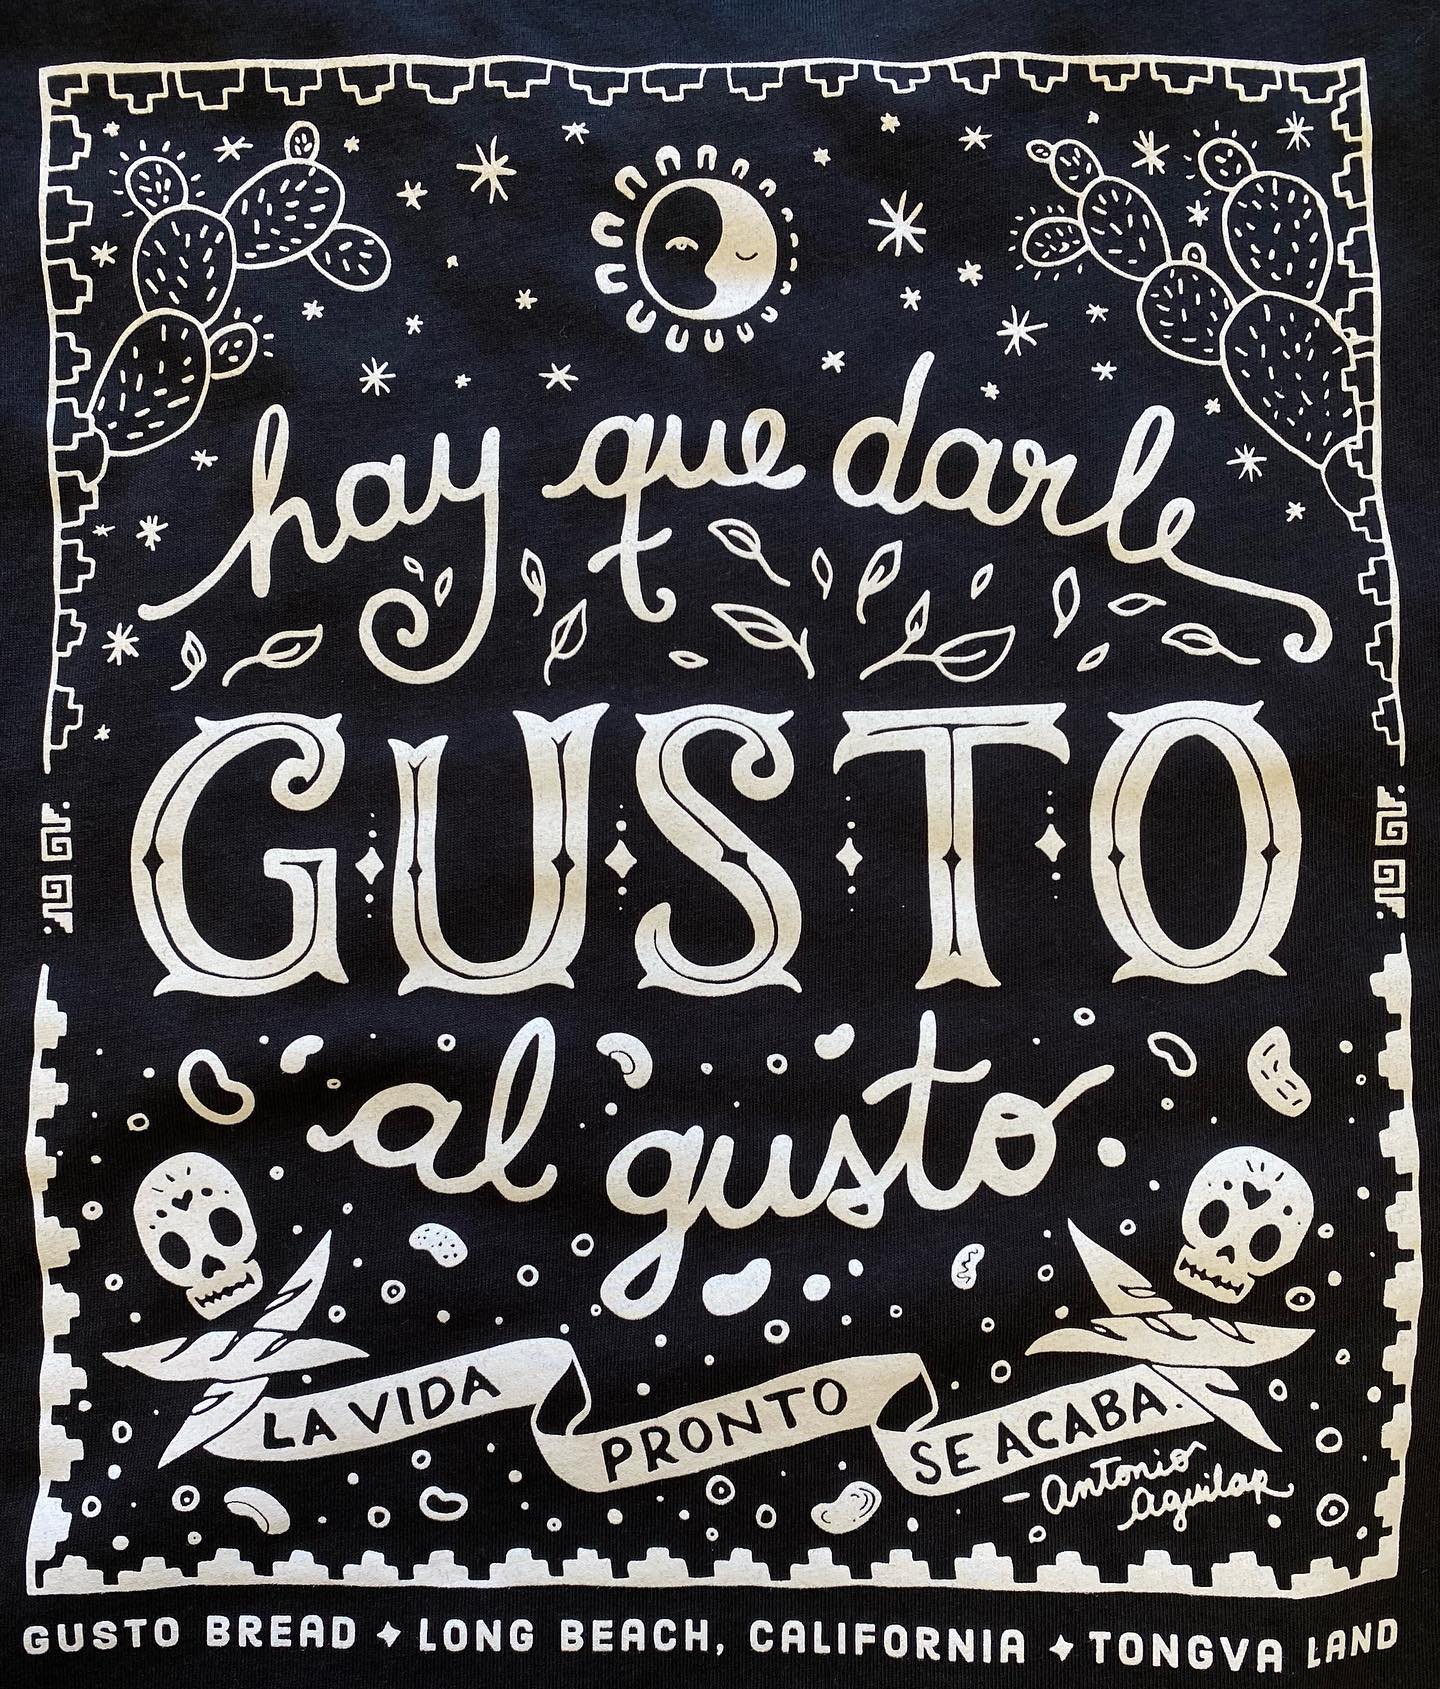 T-shirt: Gusto Al Gusto (organic cotton)